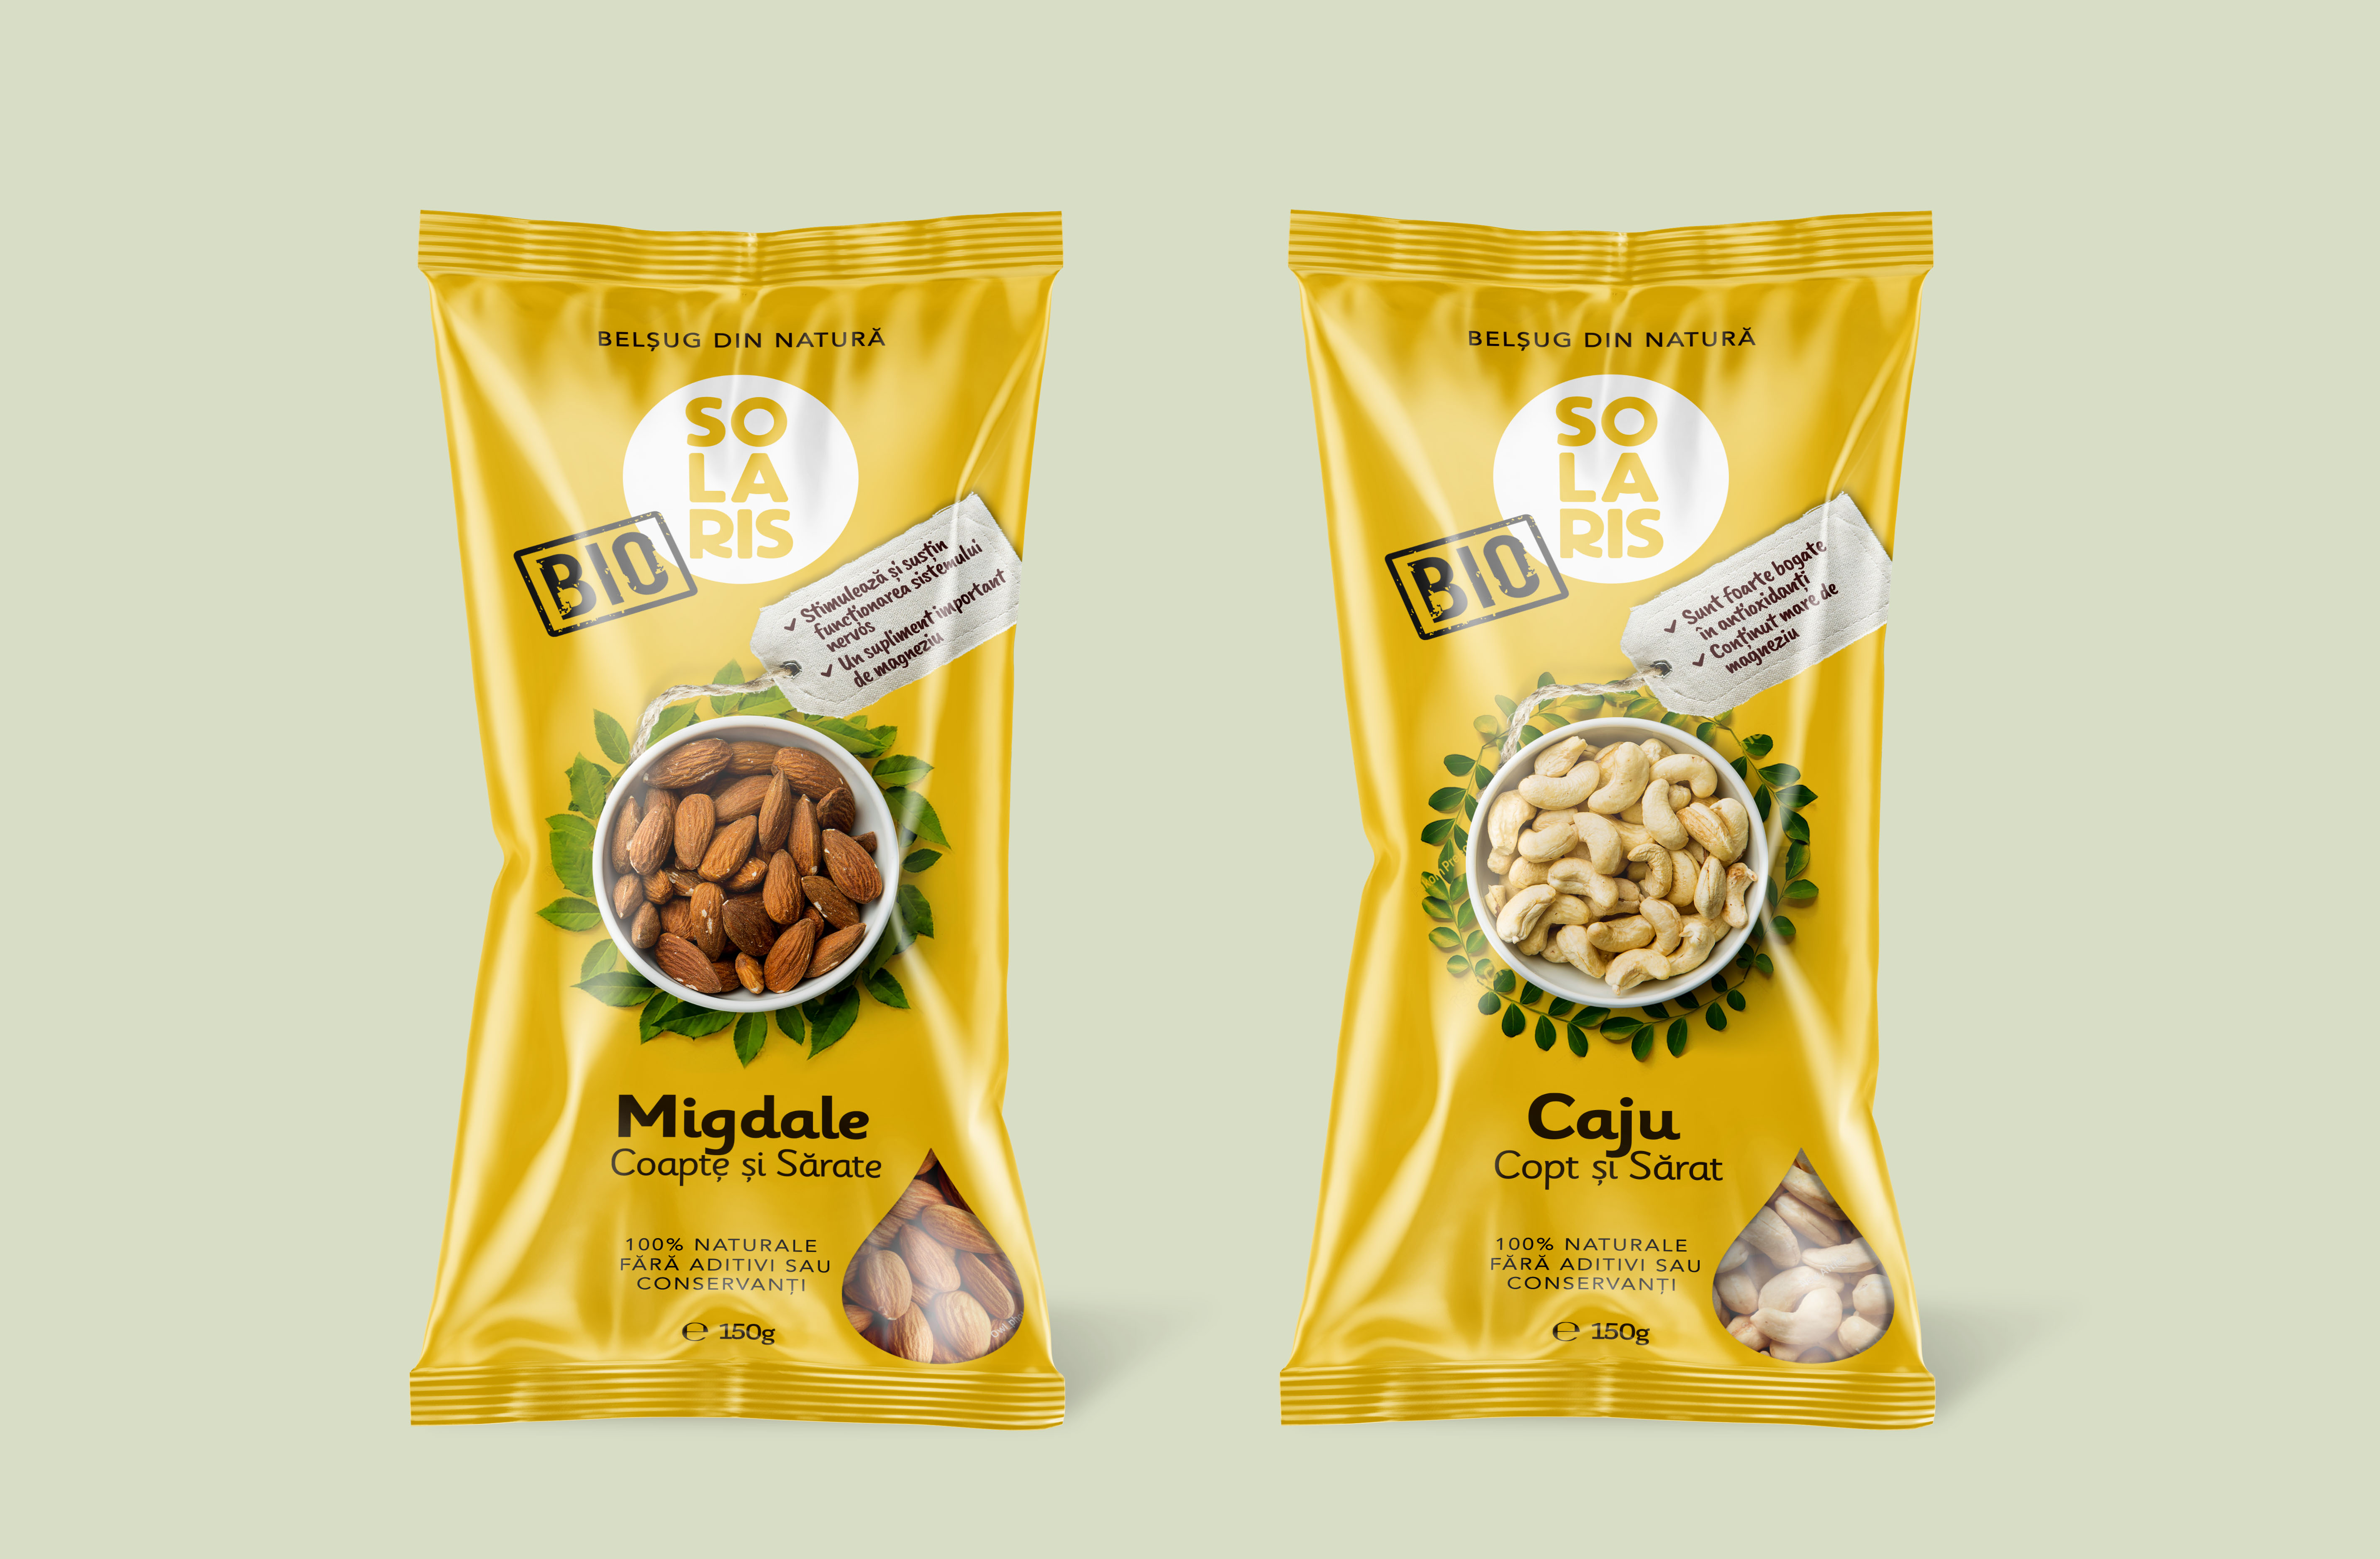 Solaris packaging design cashew almonds